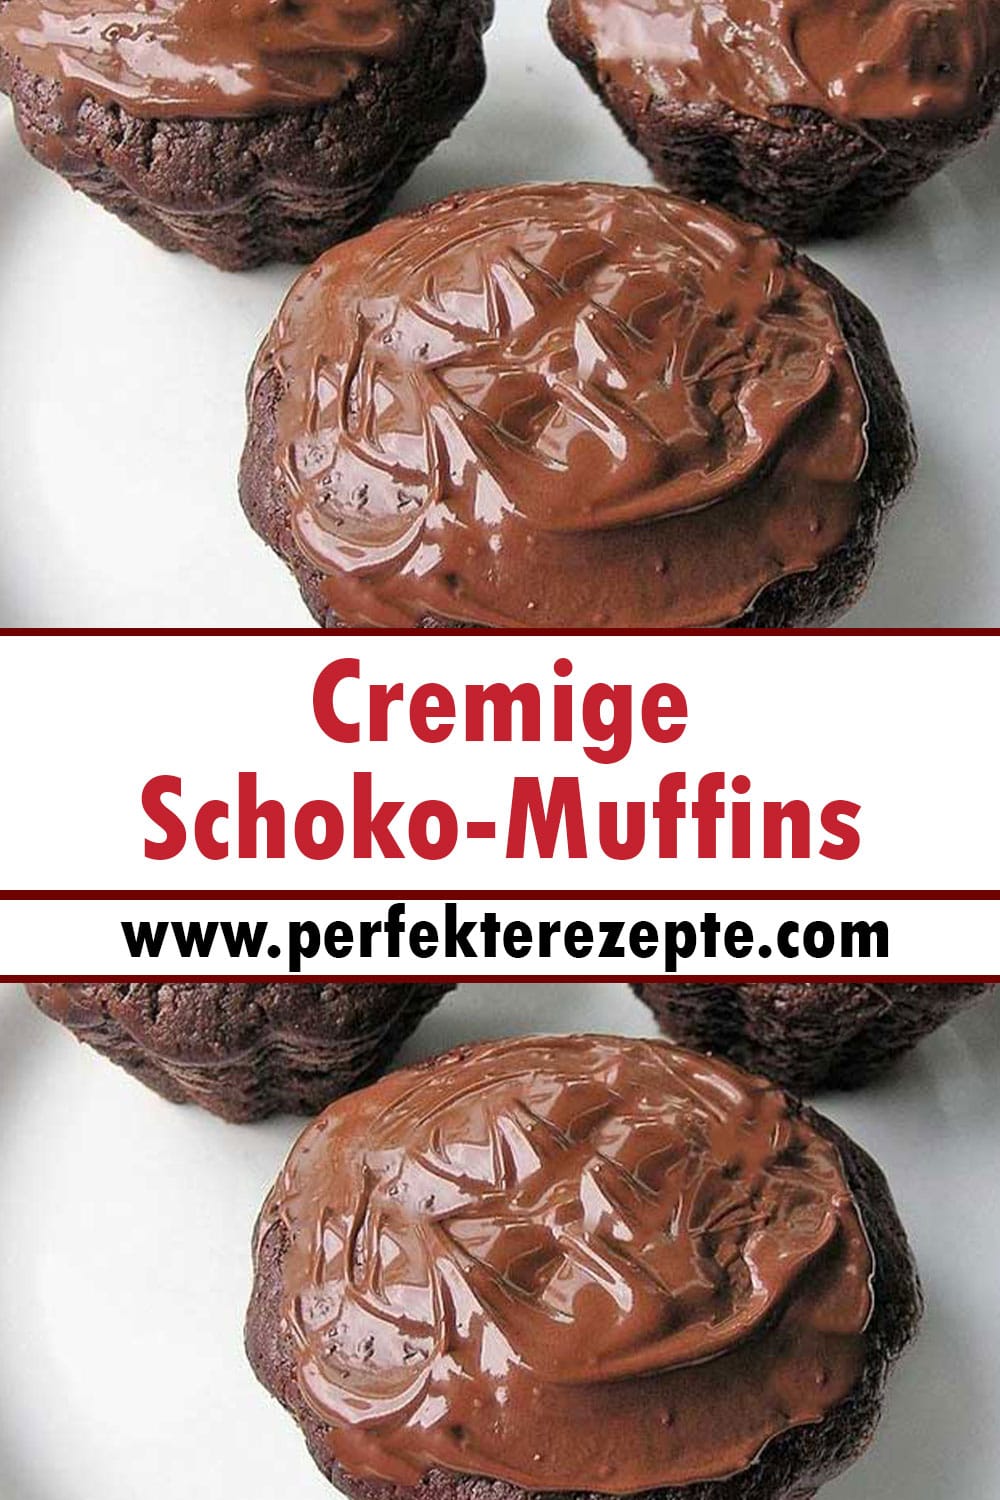 Cremige Schoko-Muffins Rezept